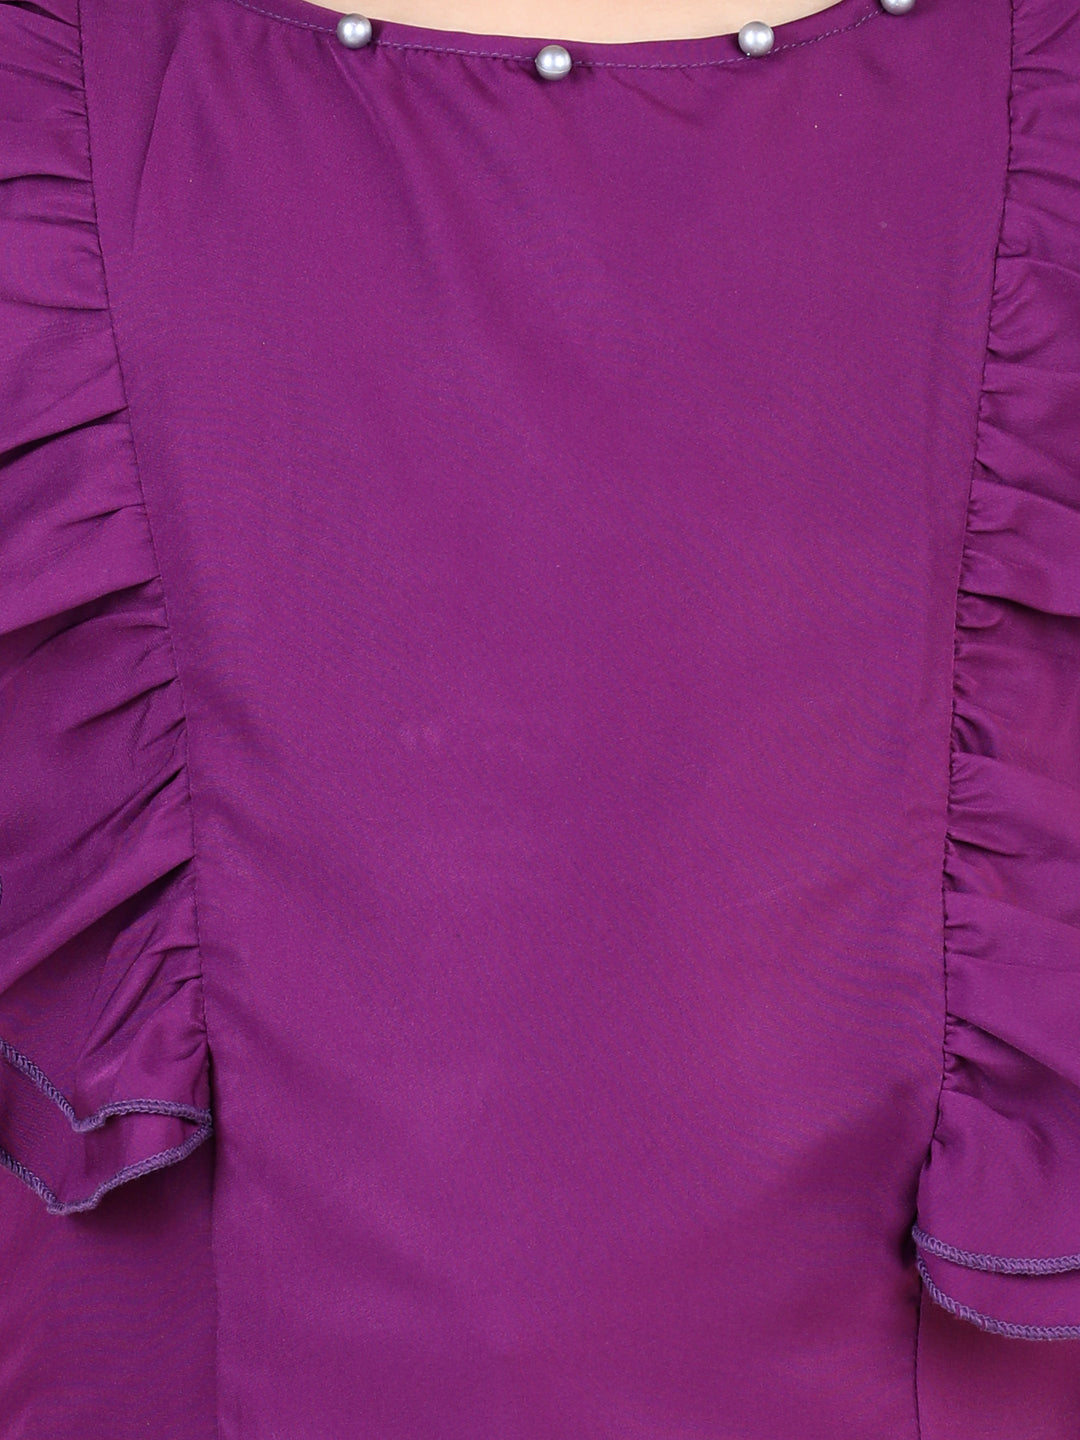 Cutiekins Printed Round Neck Polyester Top-Purple